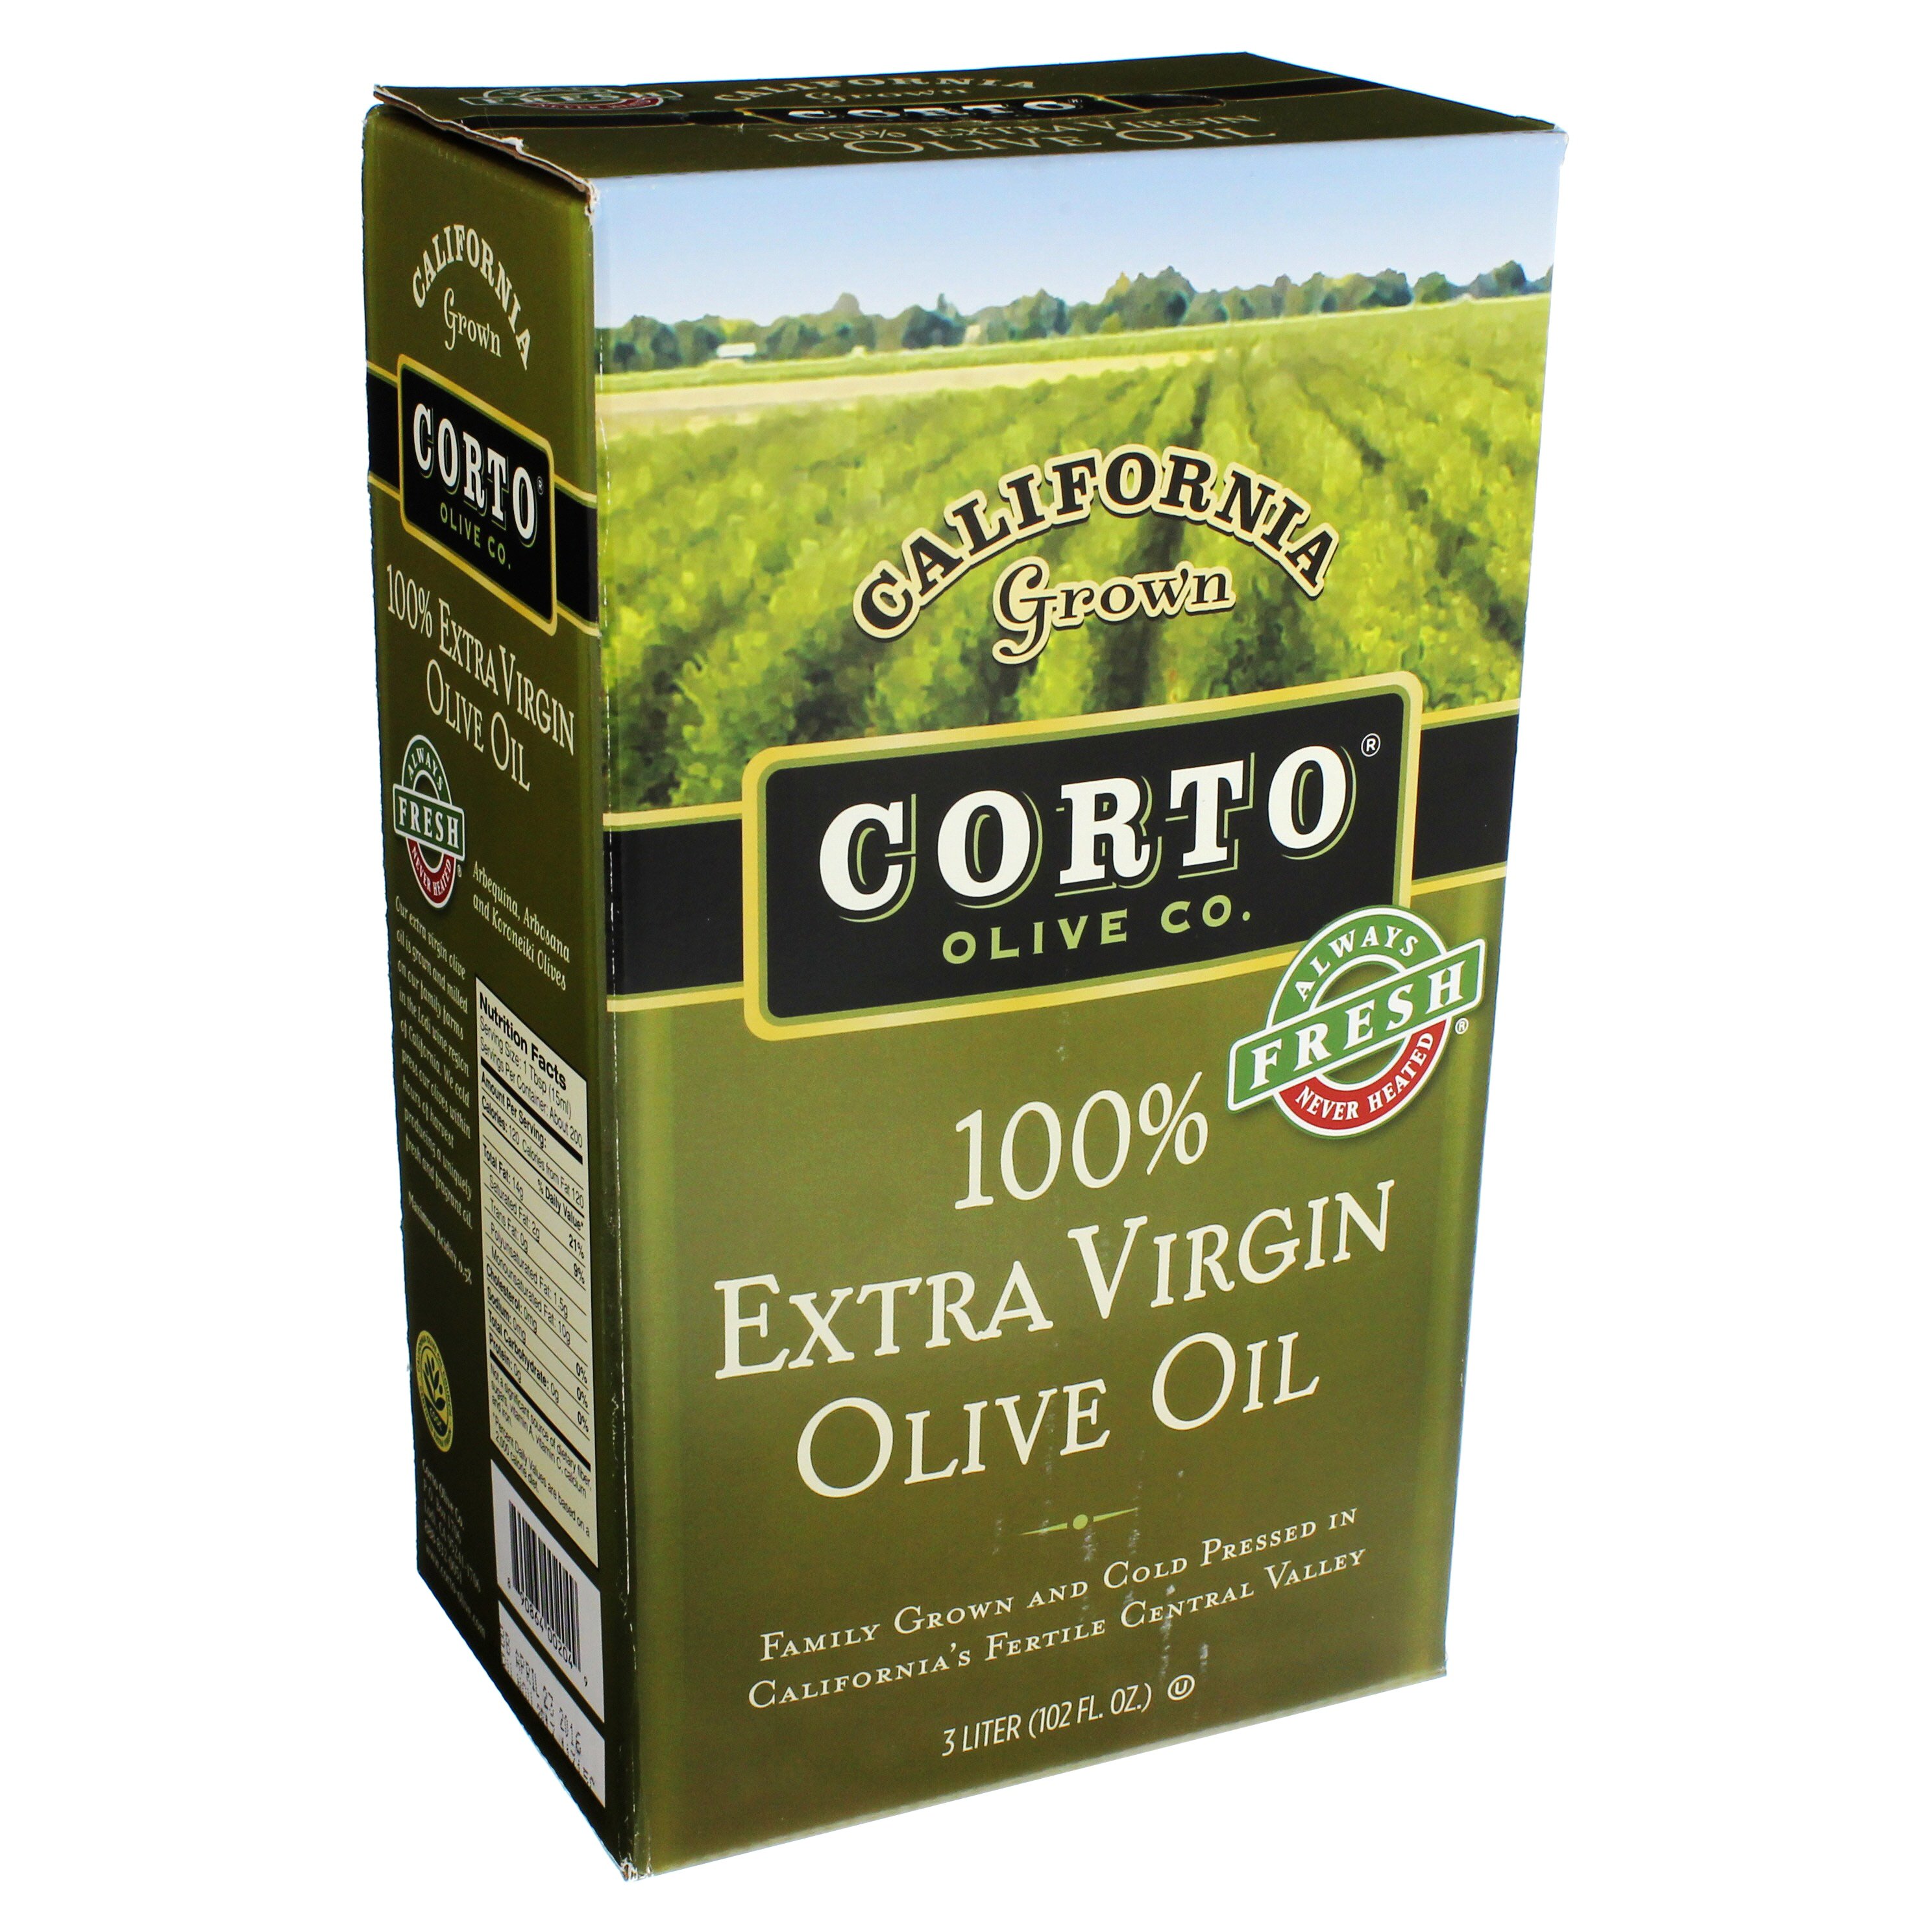 Corto Olive Co Extra Virgin Olive Oil Shop Oils At H E B